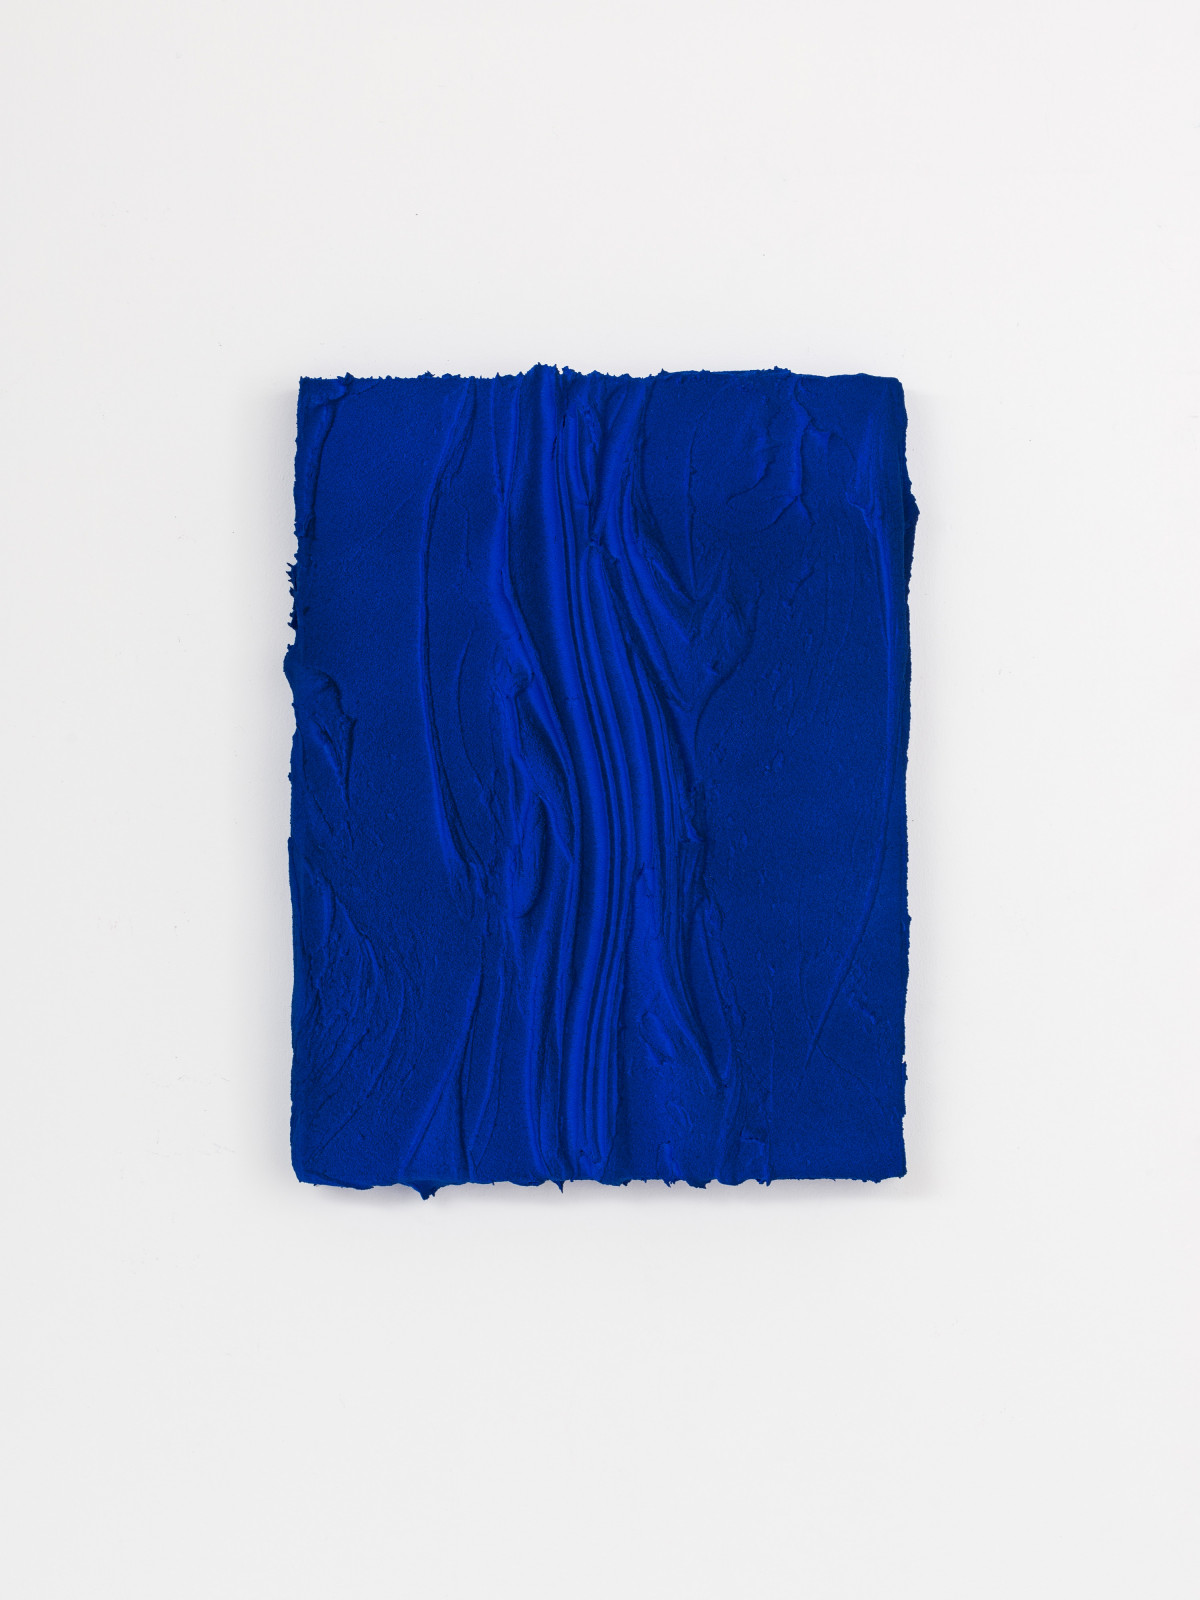 Jason Martin, ‘Untitled (Ultramarine blue/Prussian blue)’, 2022, Mixed media on aluminium